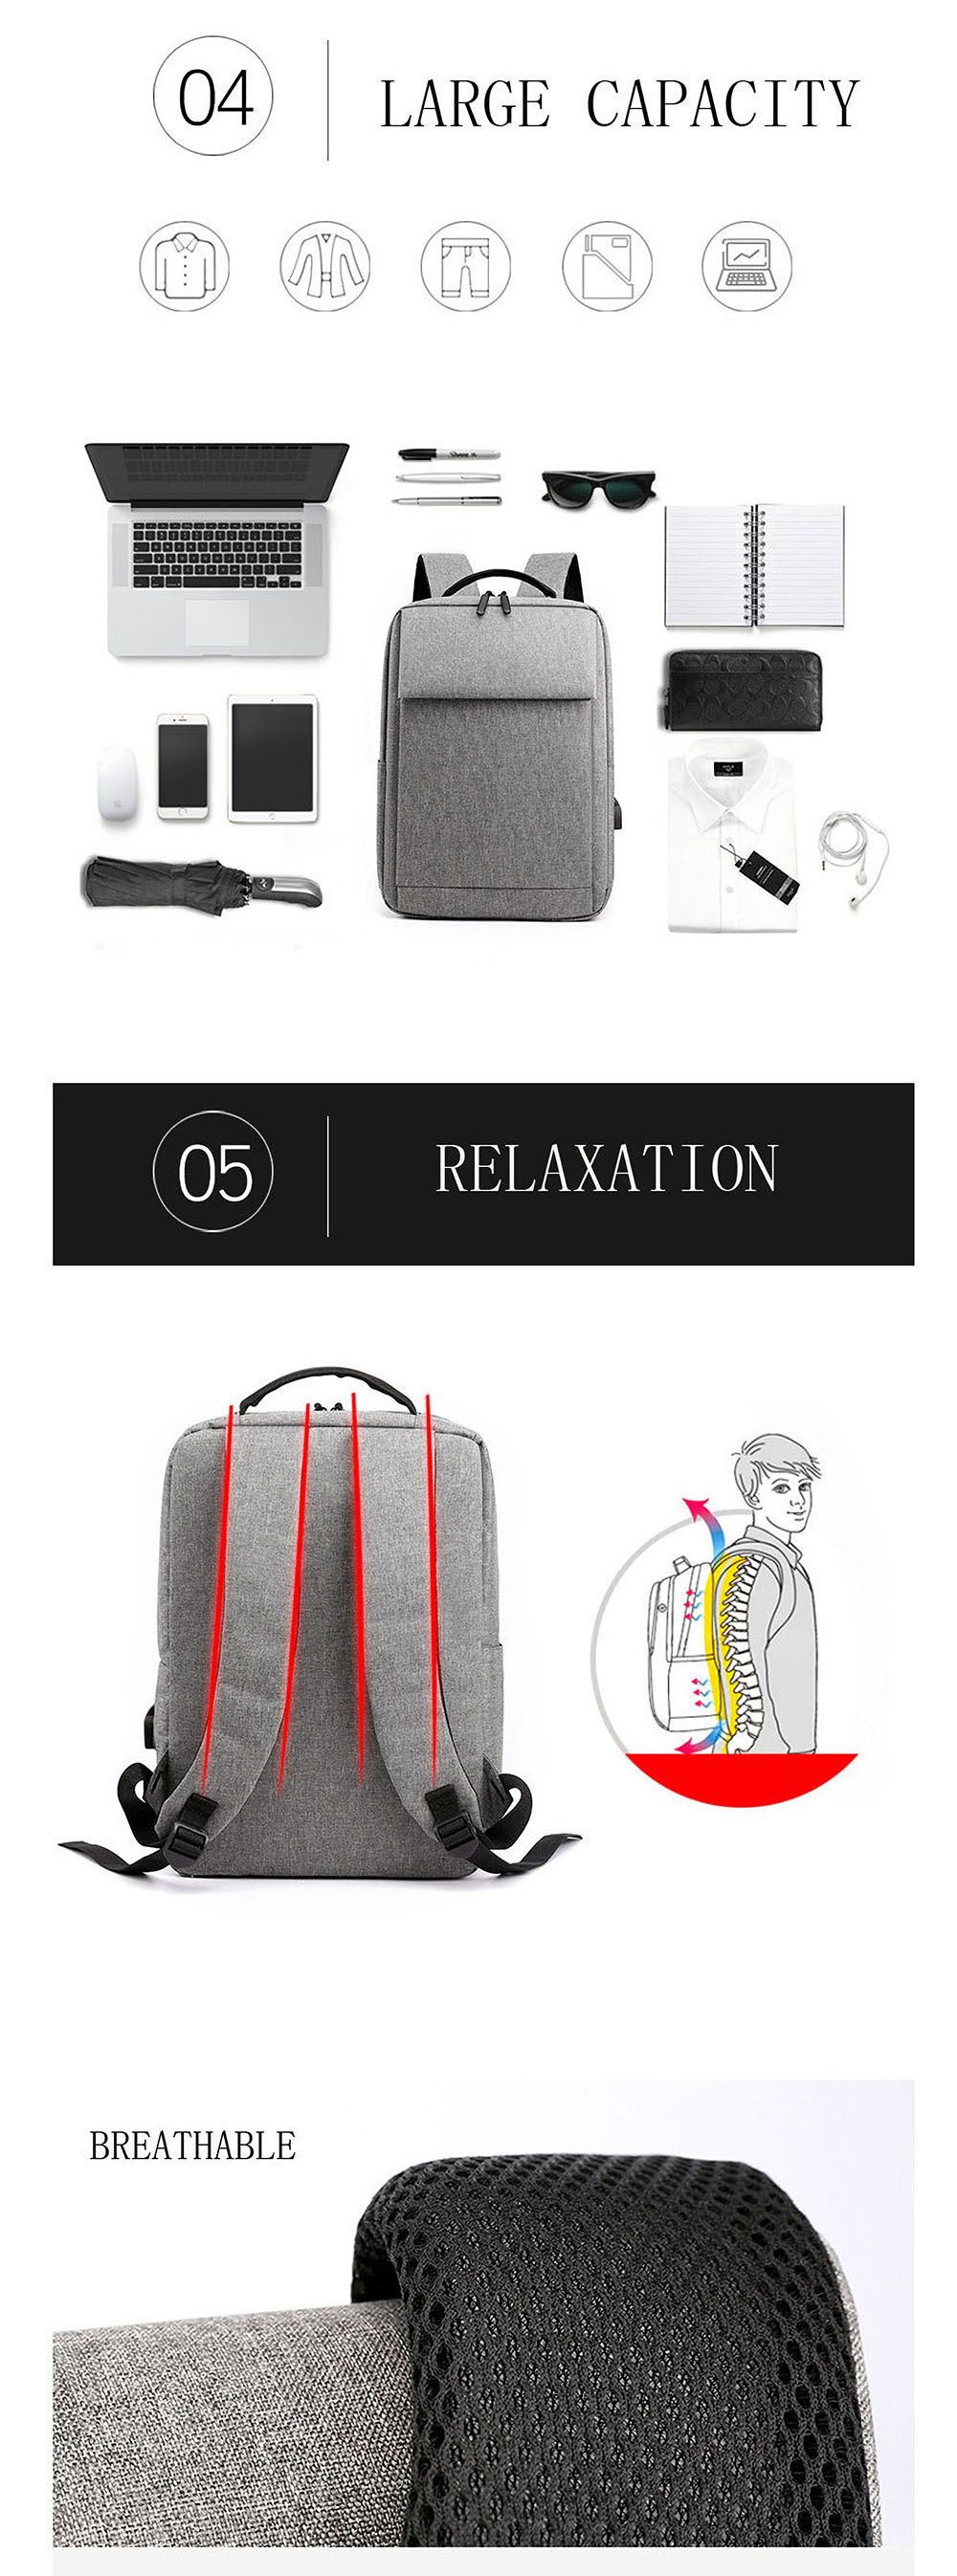 156-inch-Laptop-Bag-Backpack-with-USB-Charging-Port-Multifunction-School-Bag-Travel-Bag-Nylon-Water--1585156